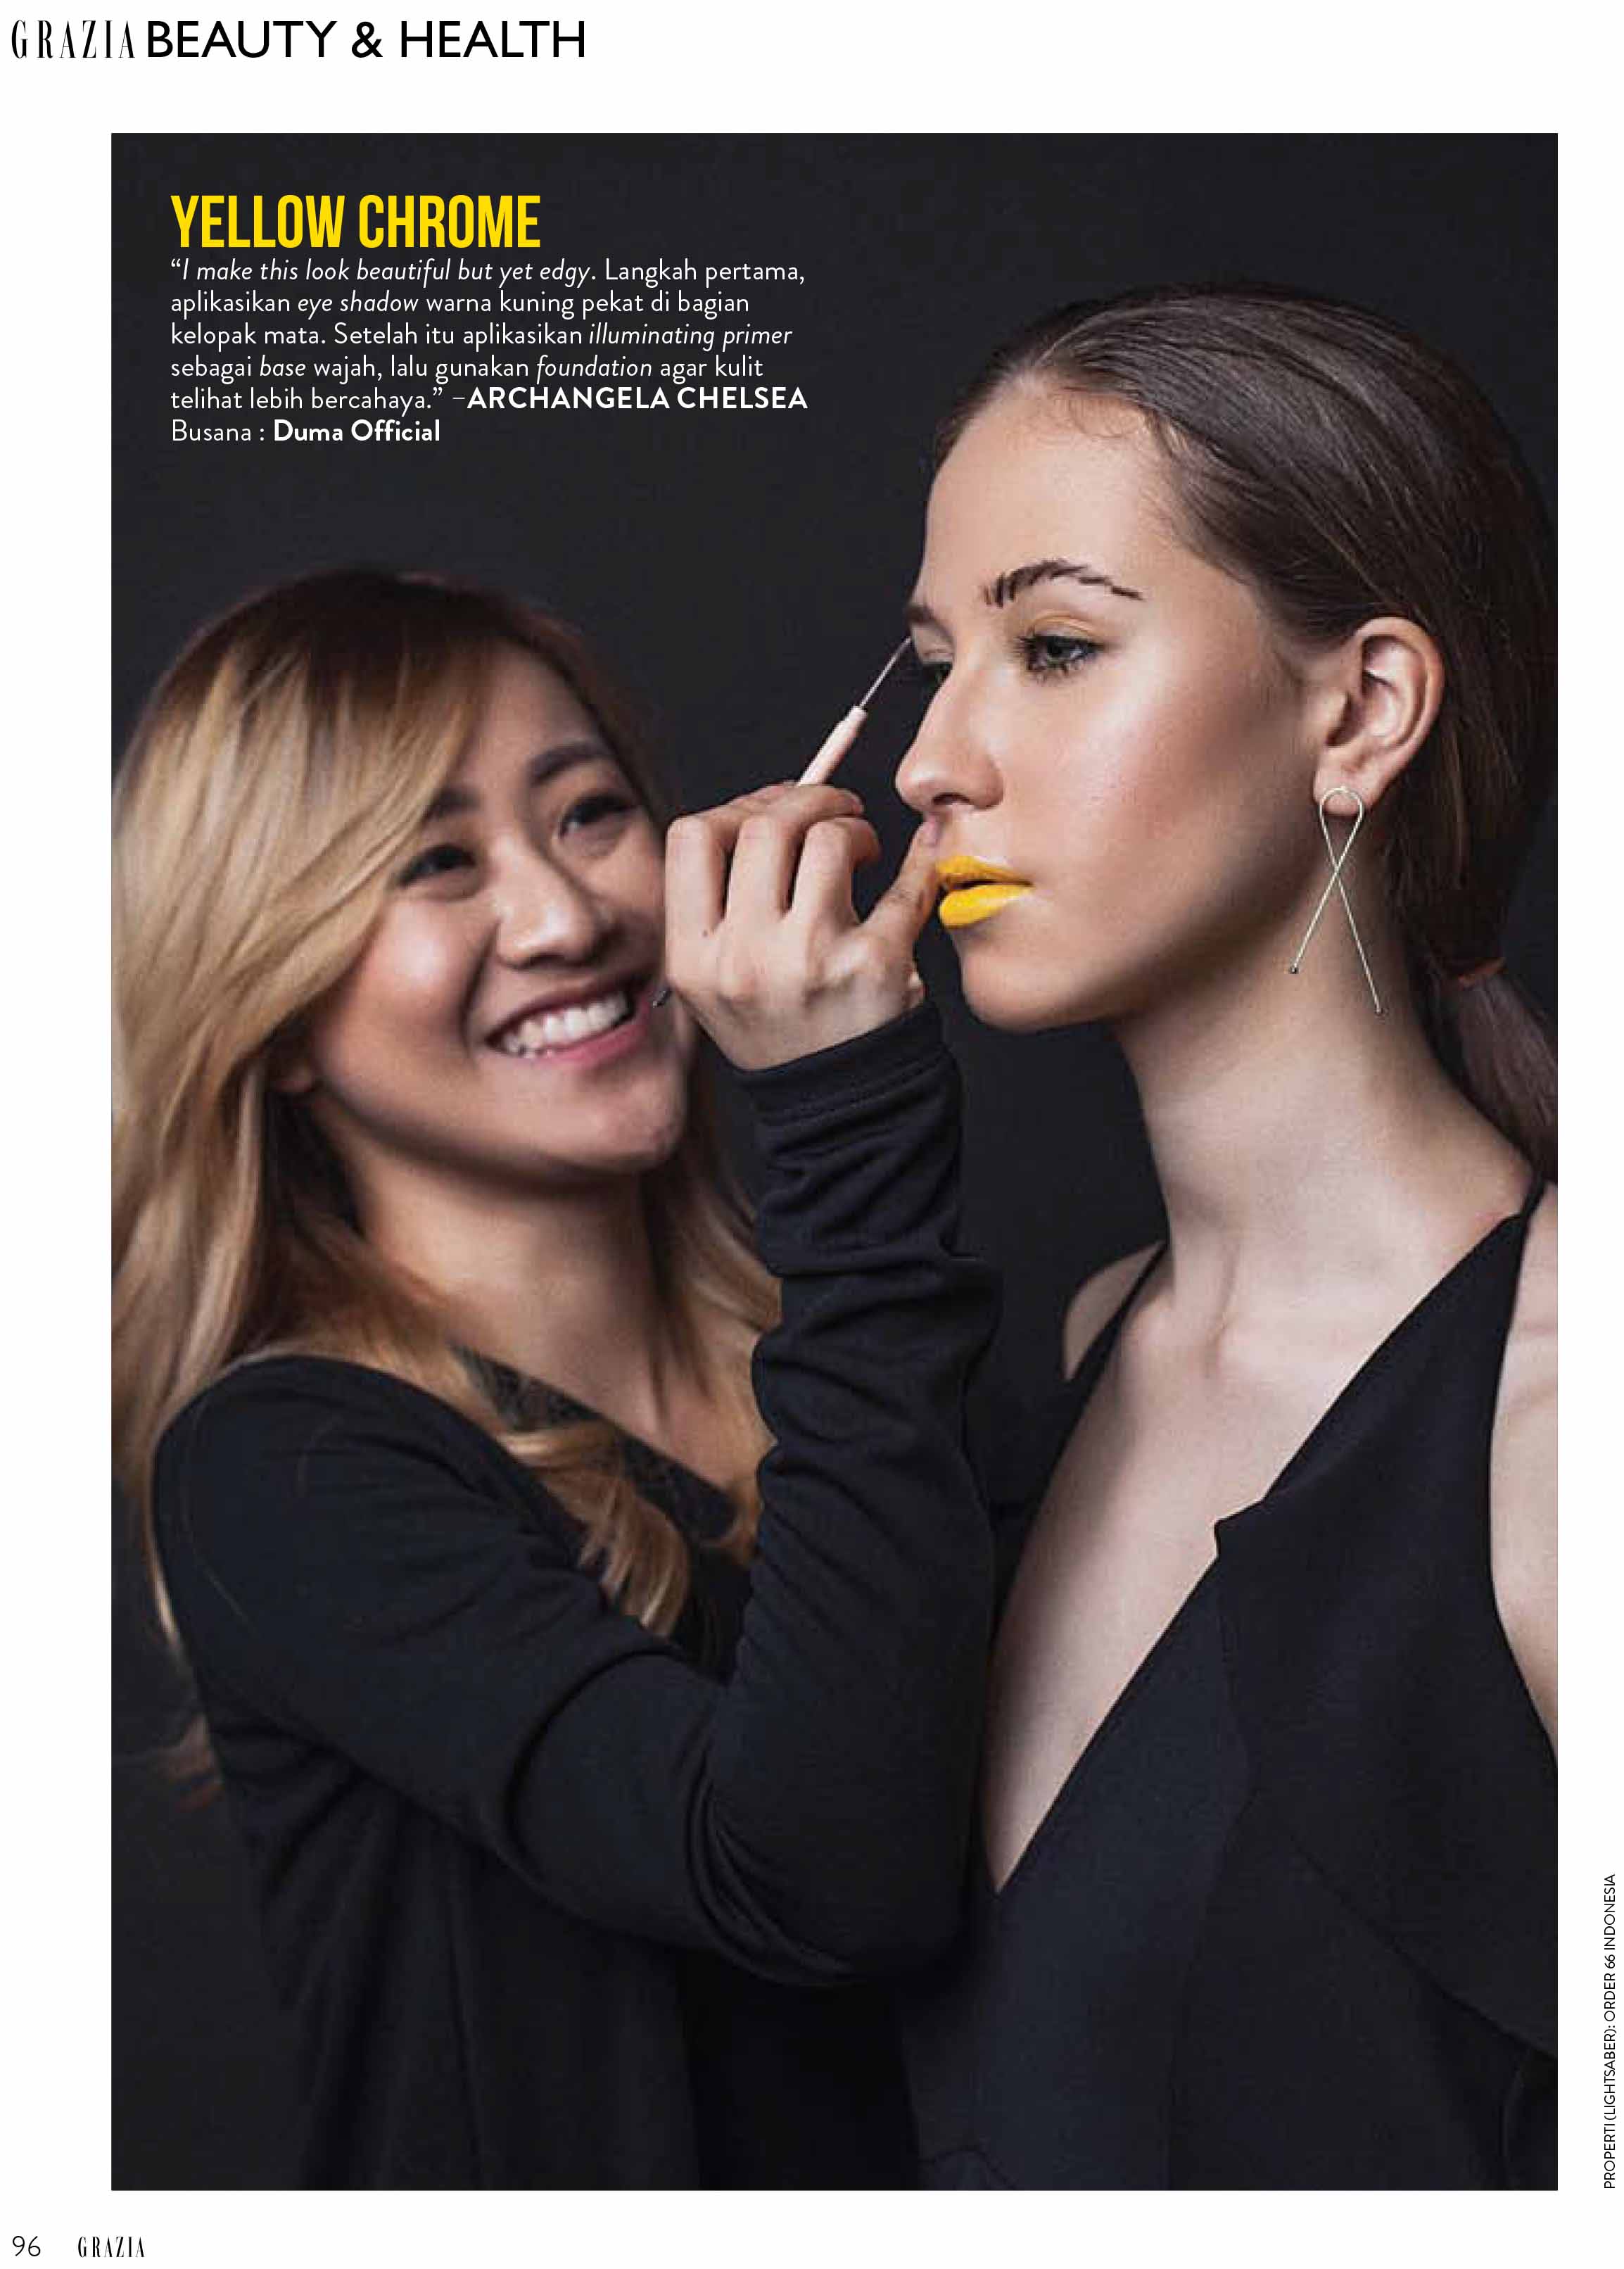 Grazia Magazine 2017 - Top 3 Makeup Artist